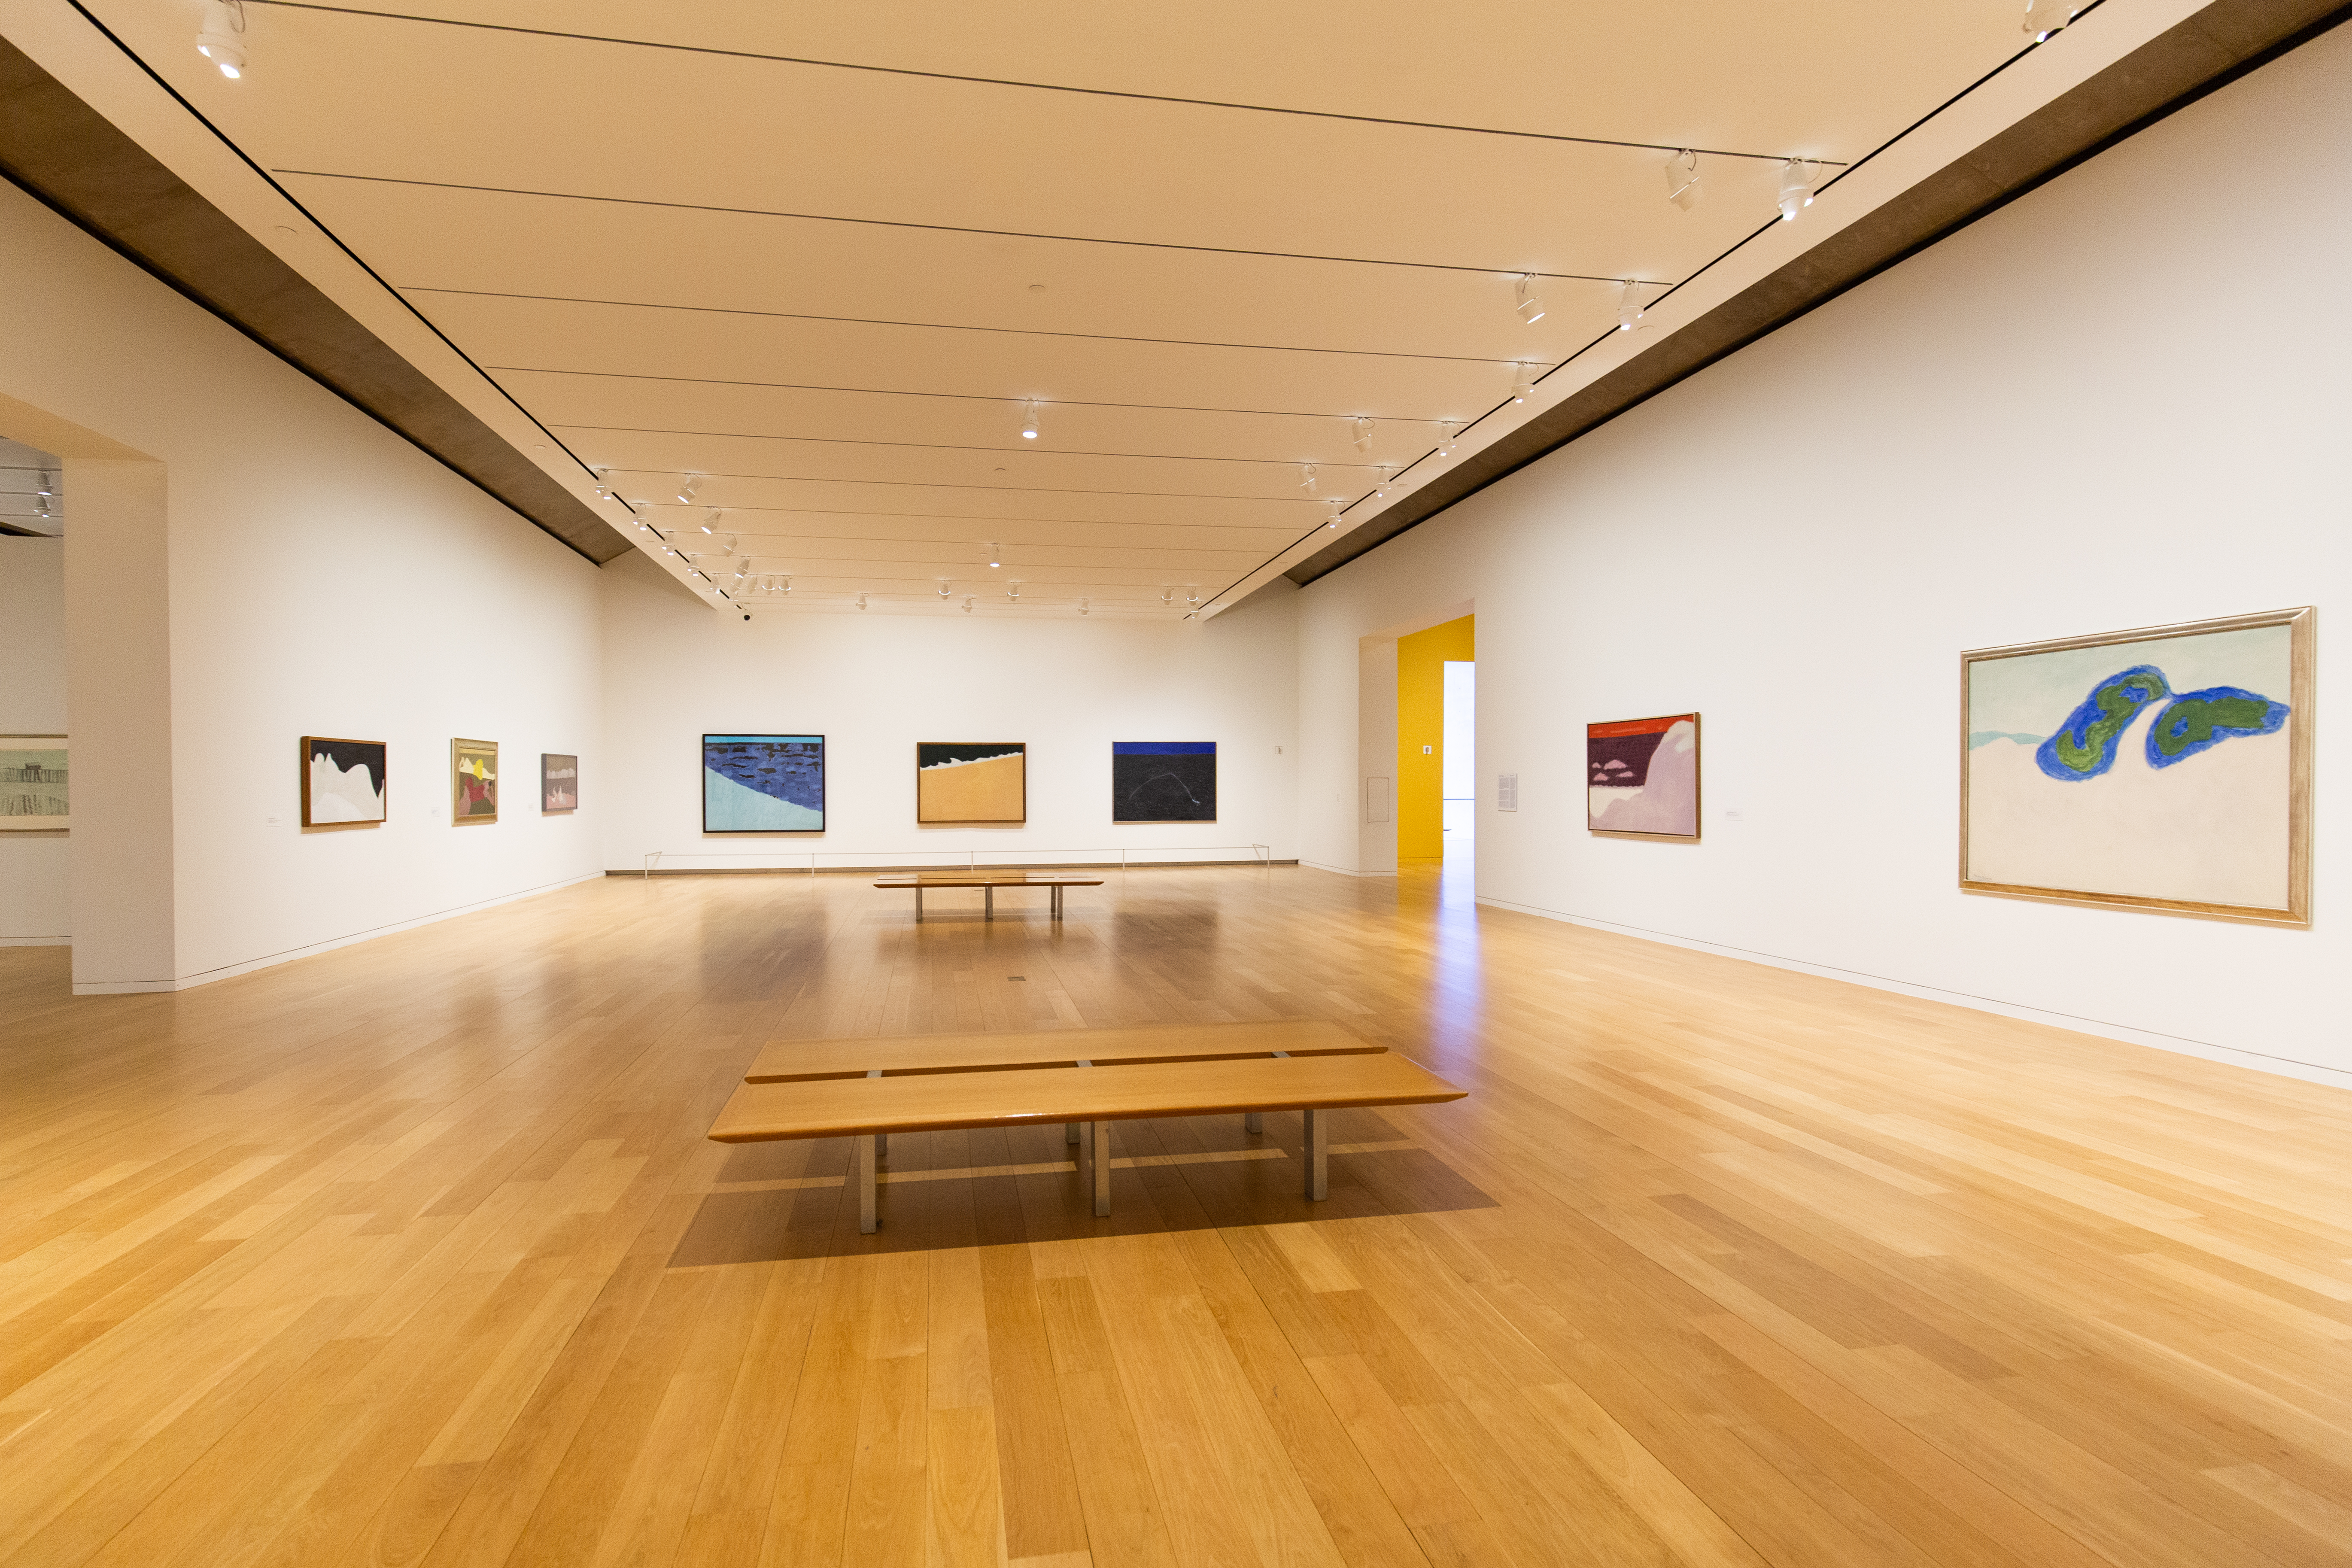 Milton Avery exhibition installed in Modern's galleries